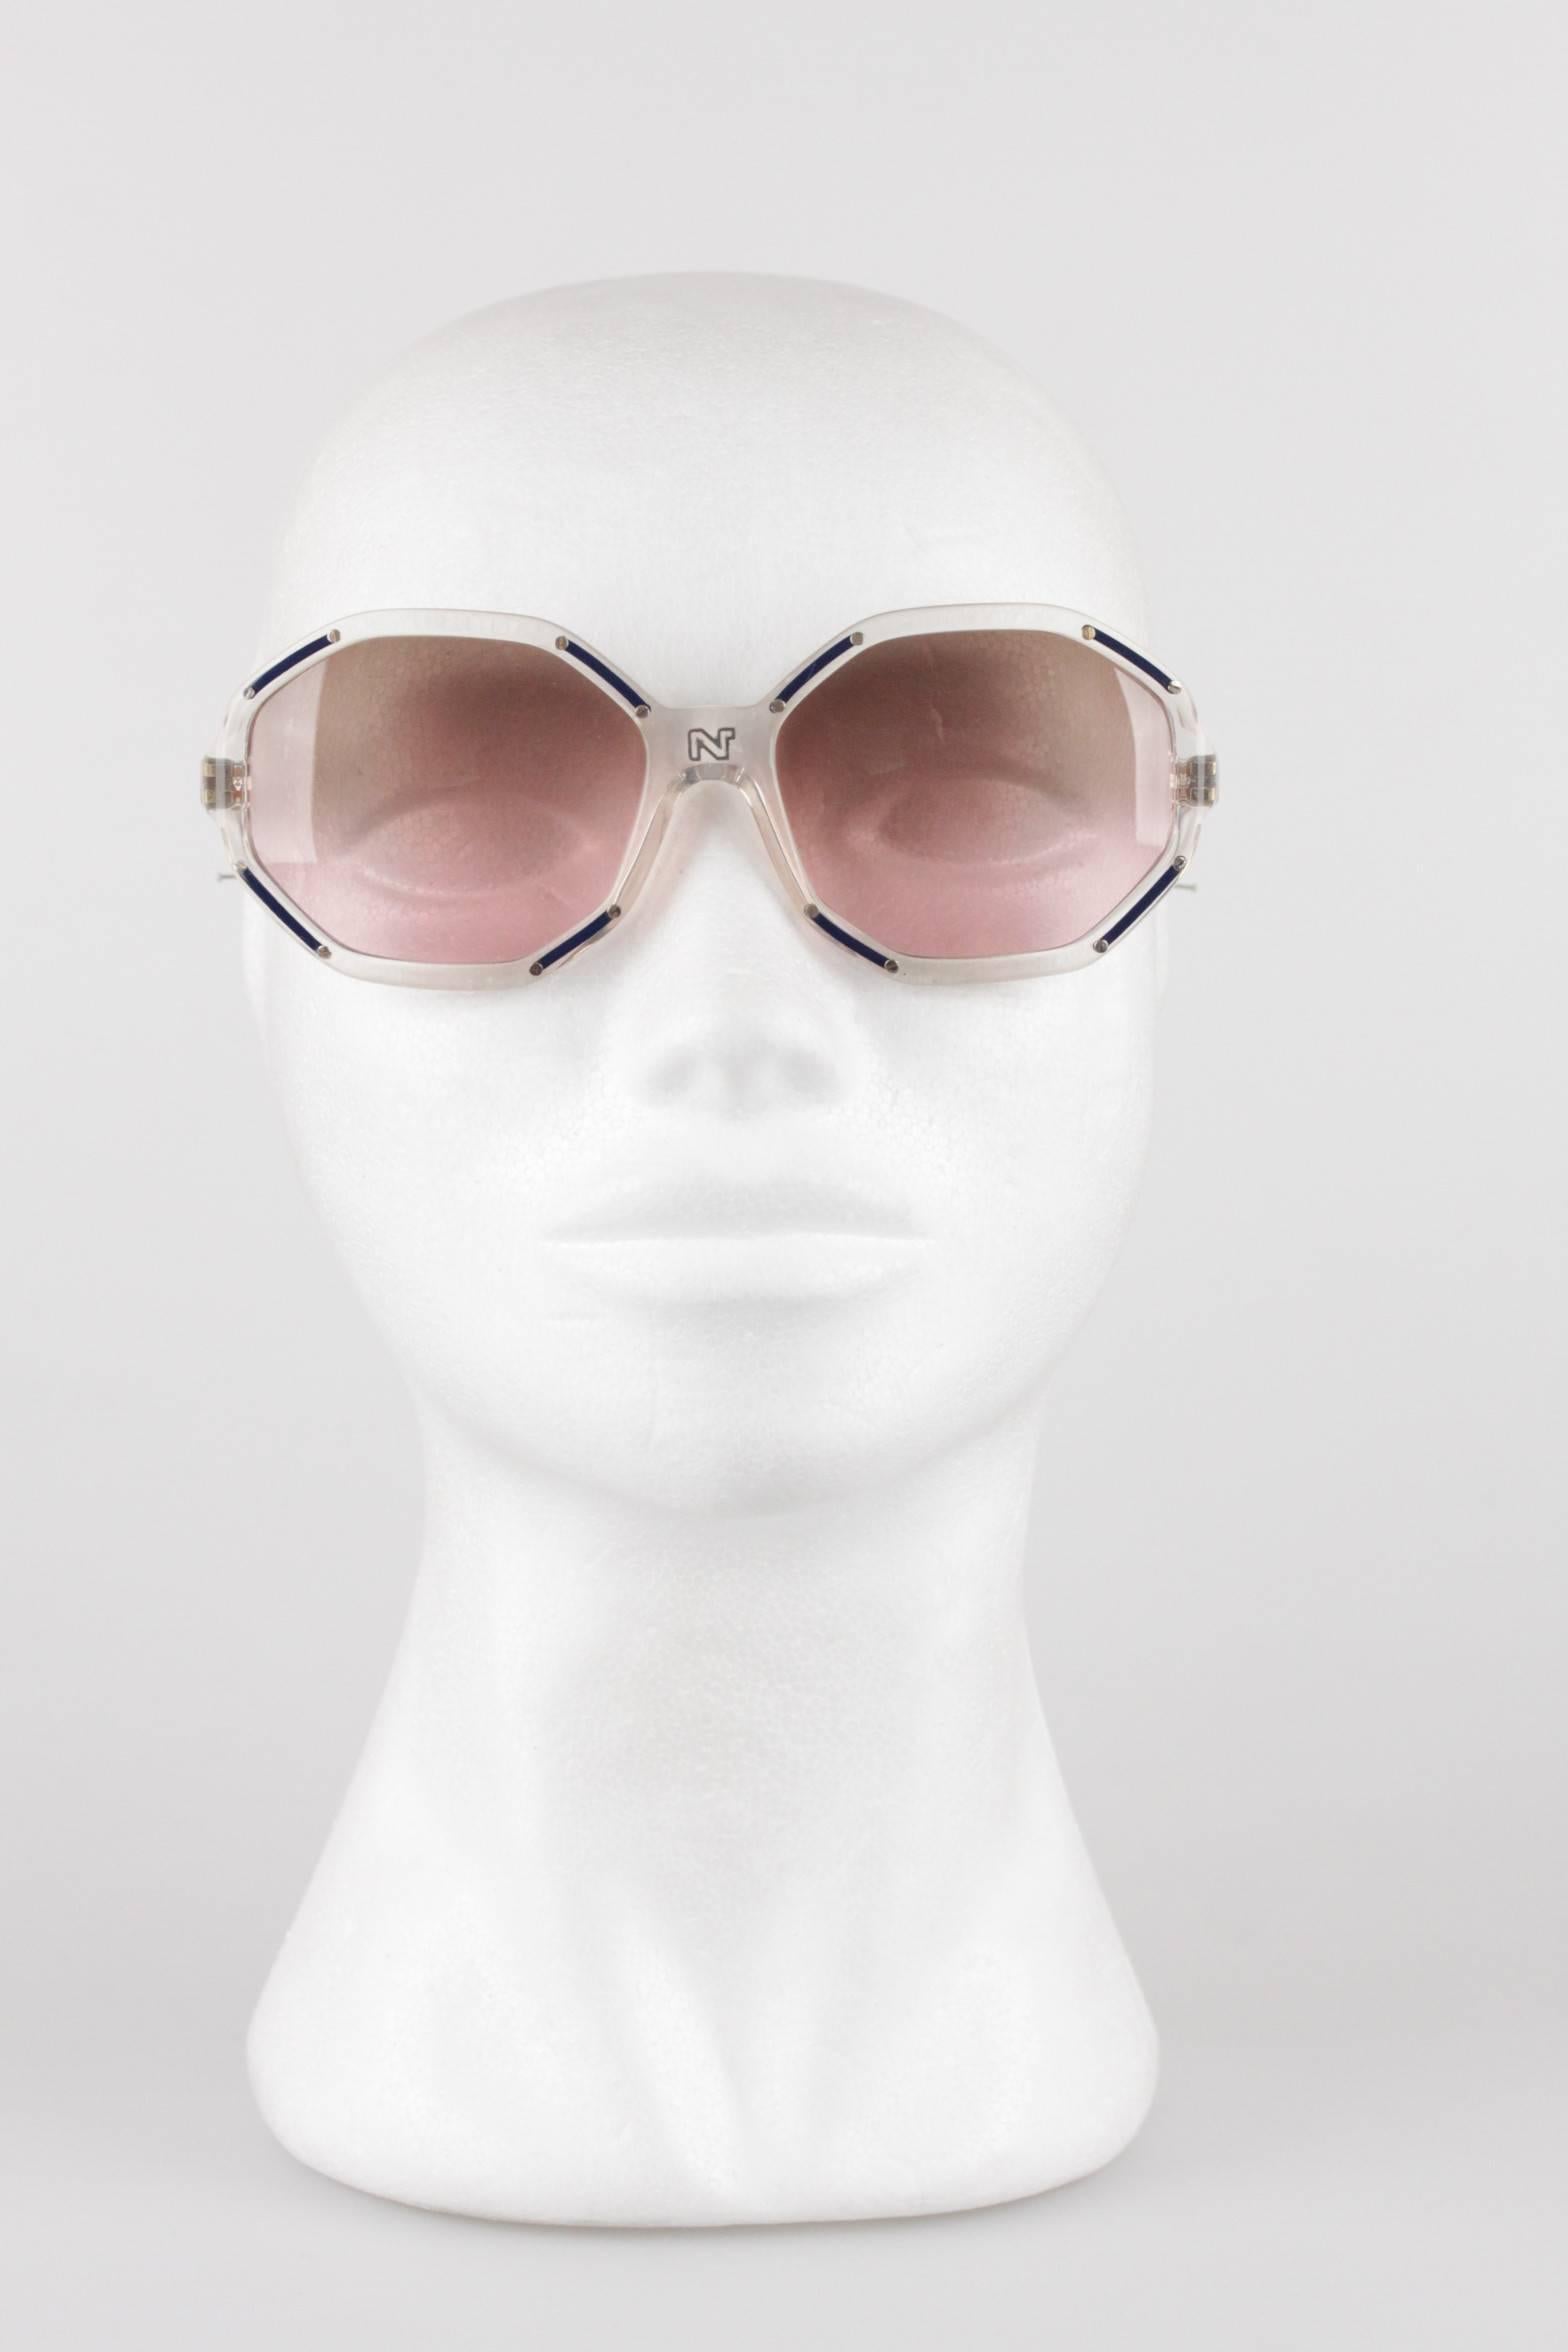 NINA RICCI Paris Vintage Sunglasses GOLD & BLUE Squared 56/20 142-VMA 5